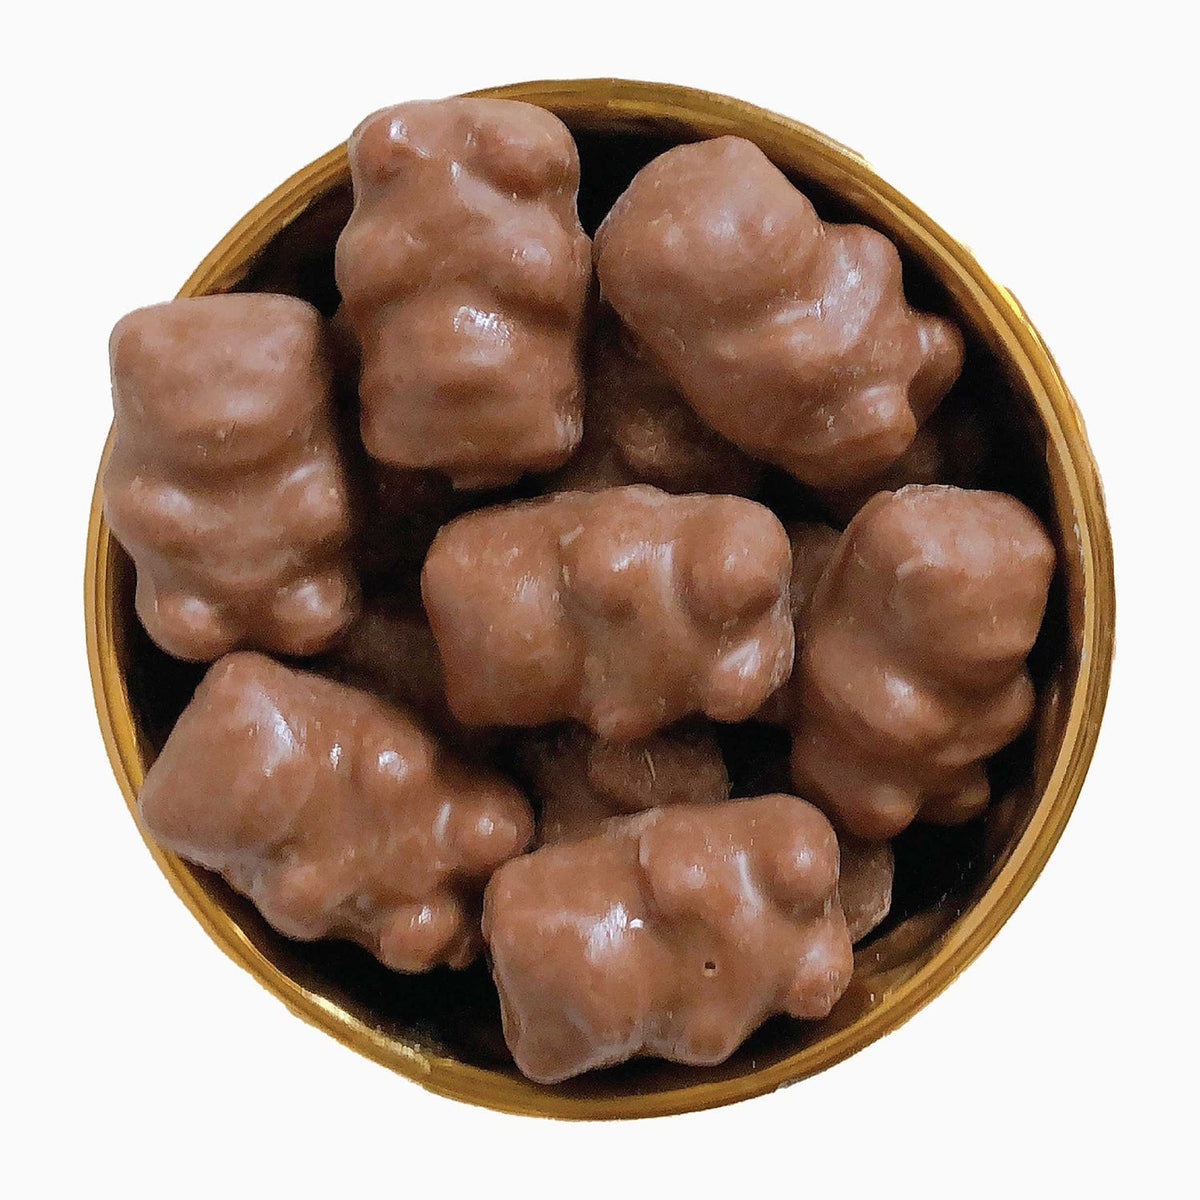 Lolli and Pops Bulk Chocolate Covered Cinnamon Bears